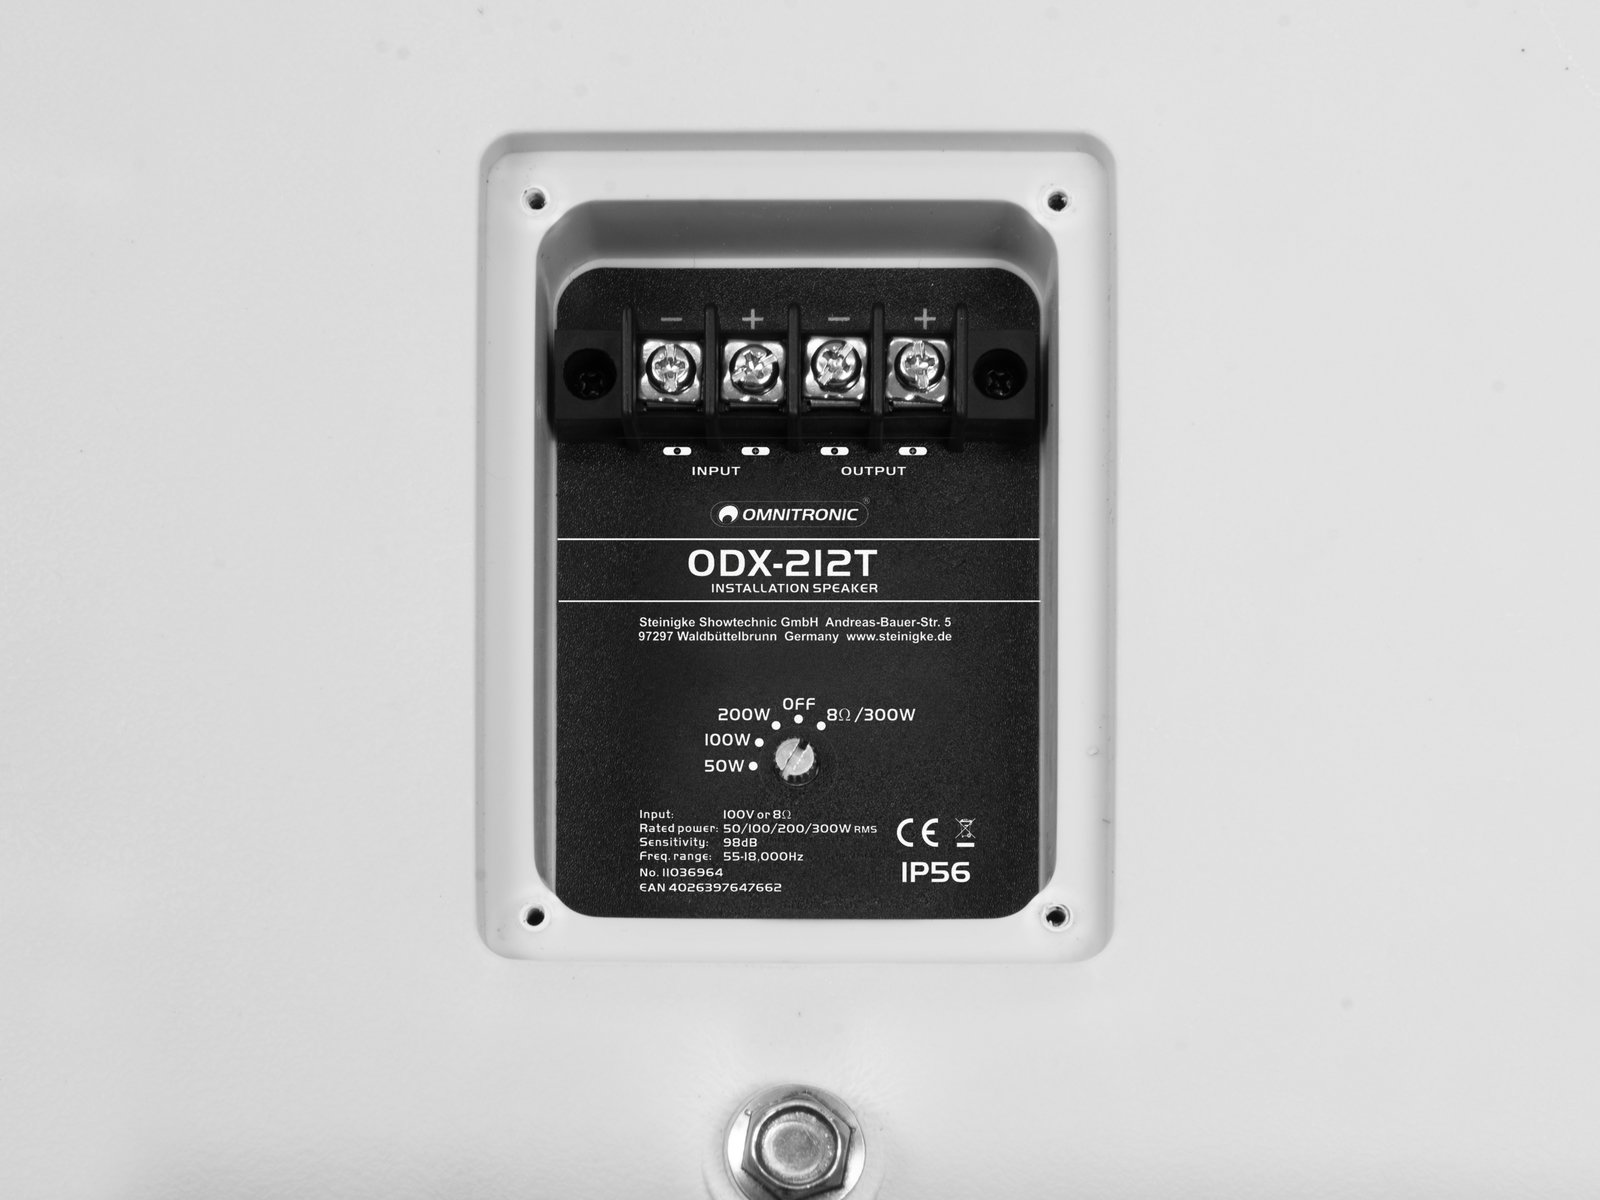 Enceinte d'installation ODX-212TM 100 V gris foncé - omnitronic